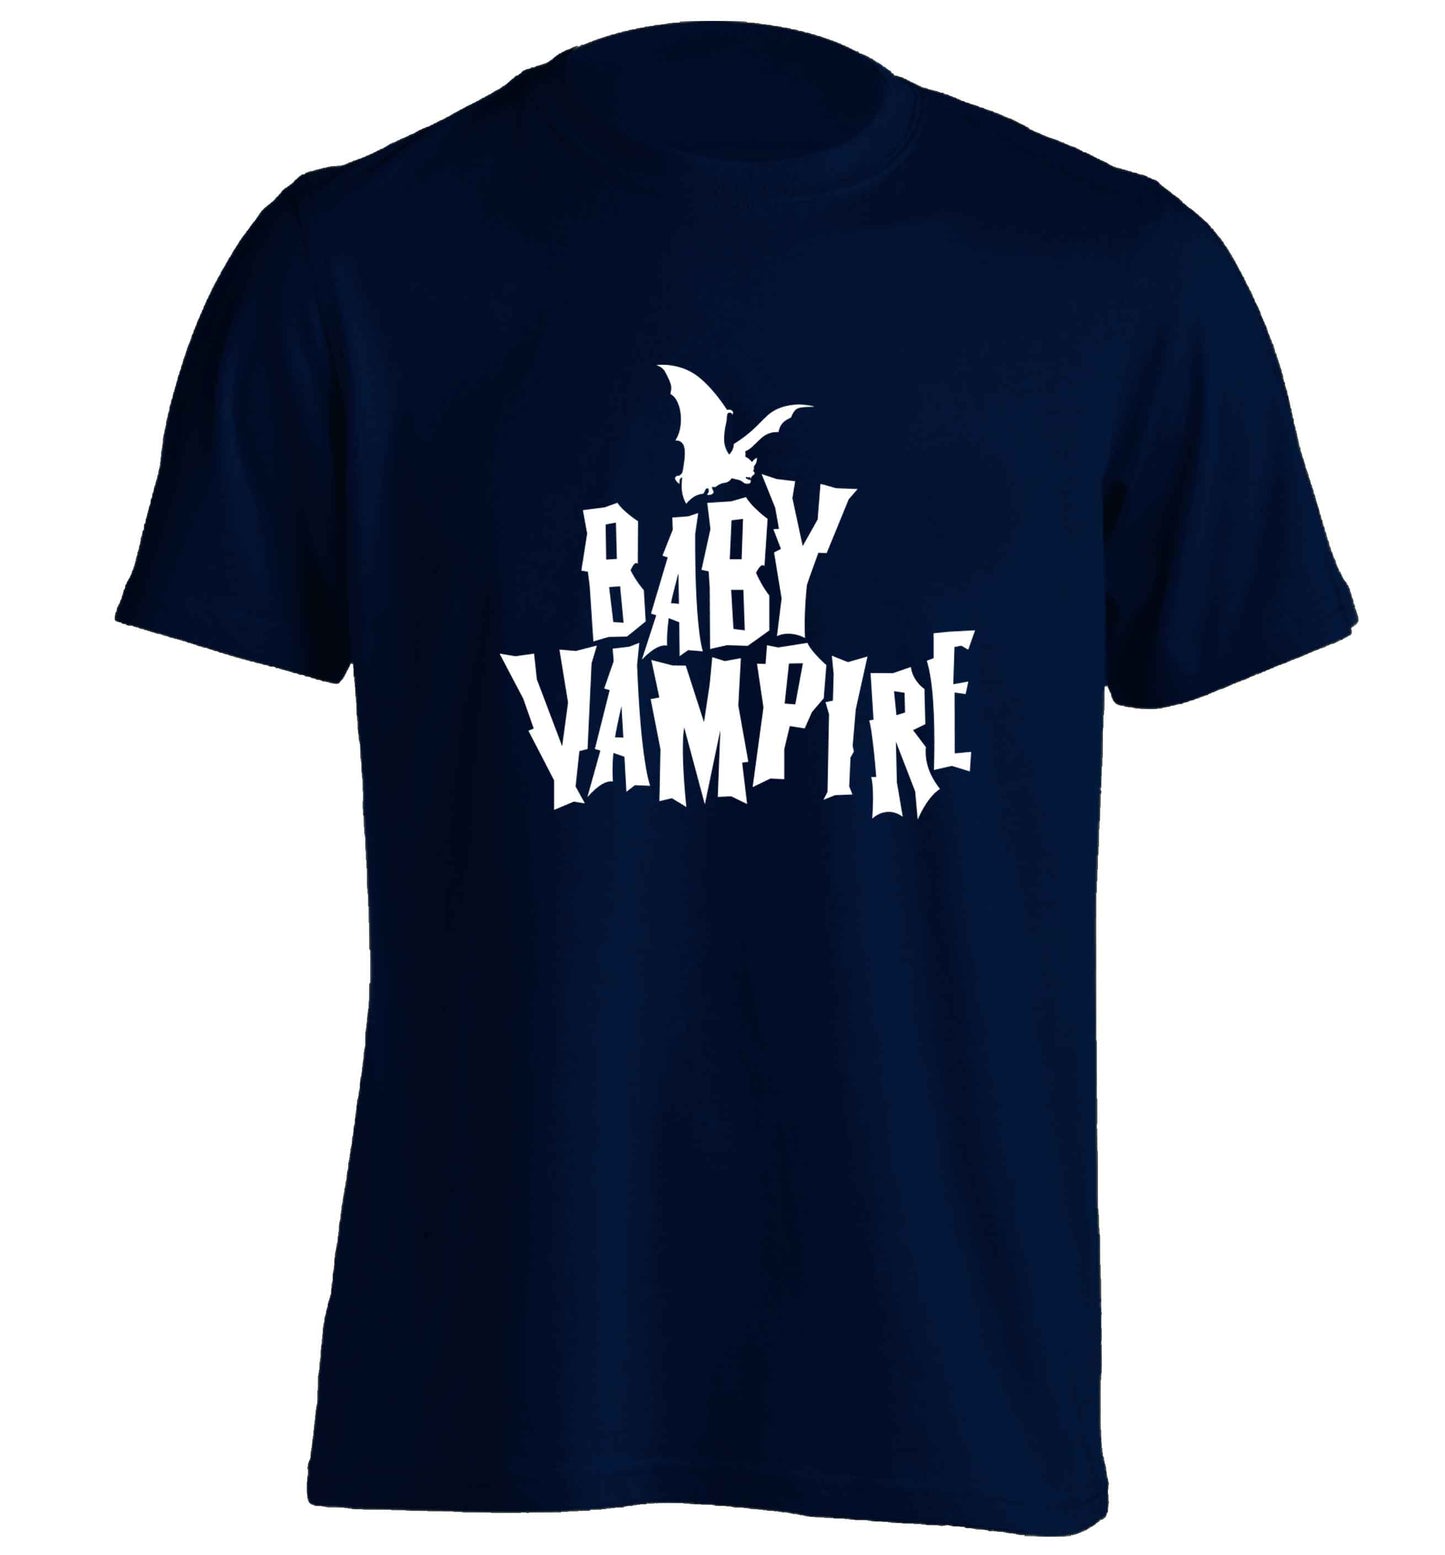 Baby vampire adults unisex navy Tshirt 2XL